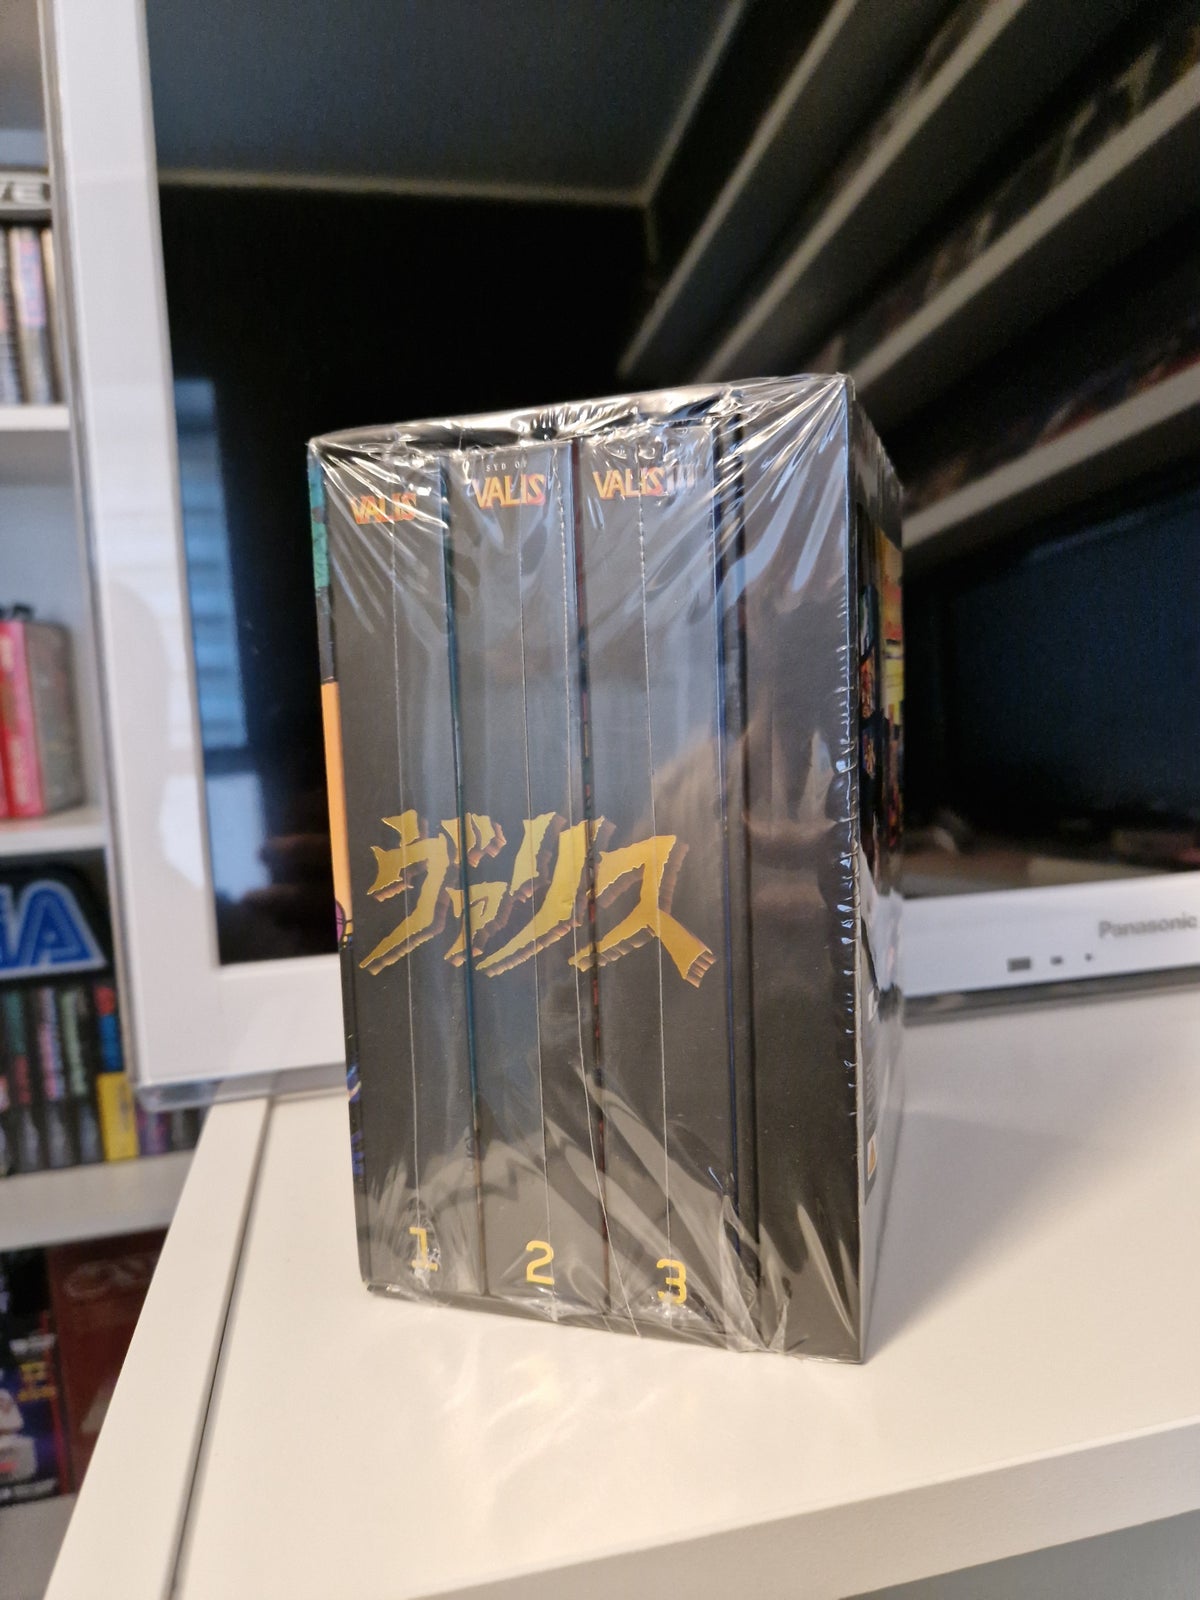 Valis - Complete Collection Set. - Sega Mega Drive, Sega